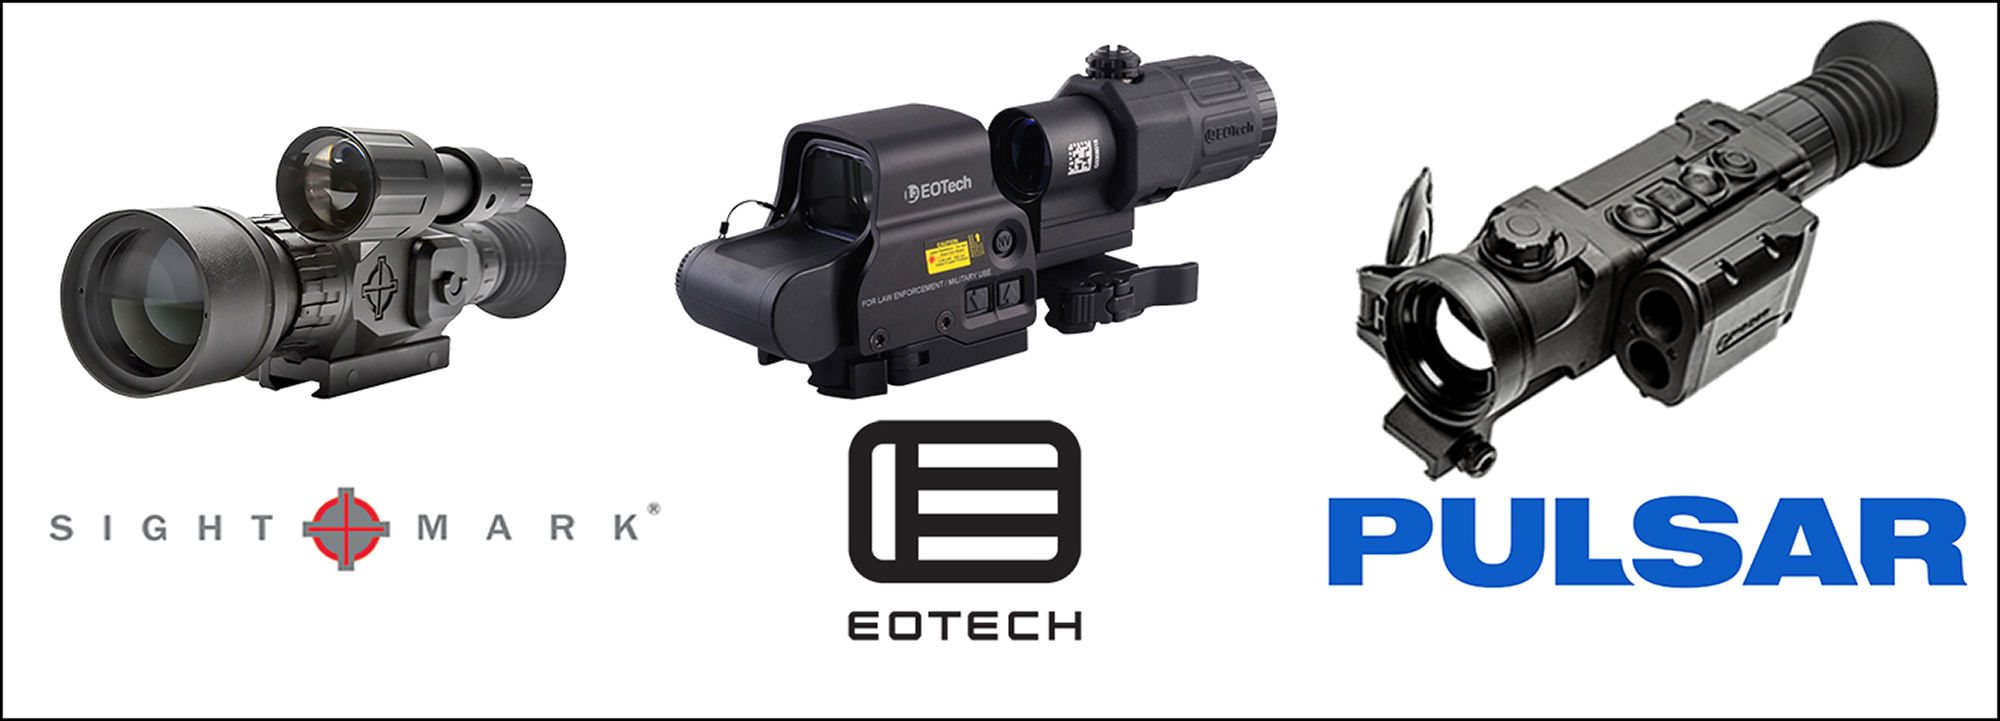 Firearms Optics Image - Pulsar, Sightmark and EOTECH